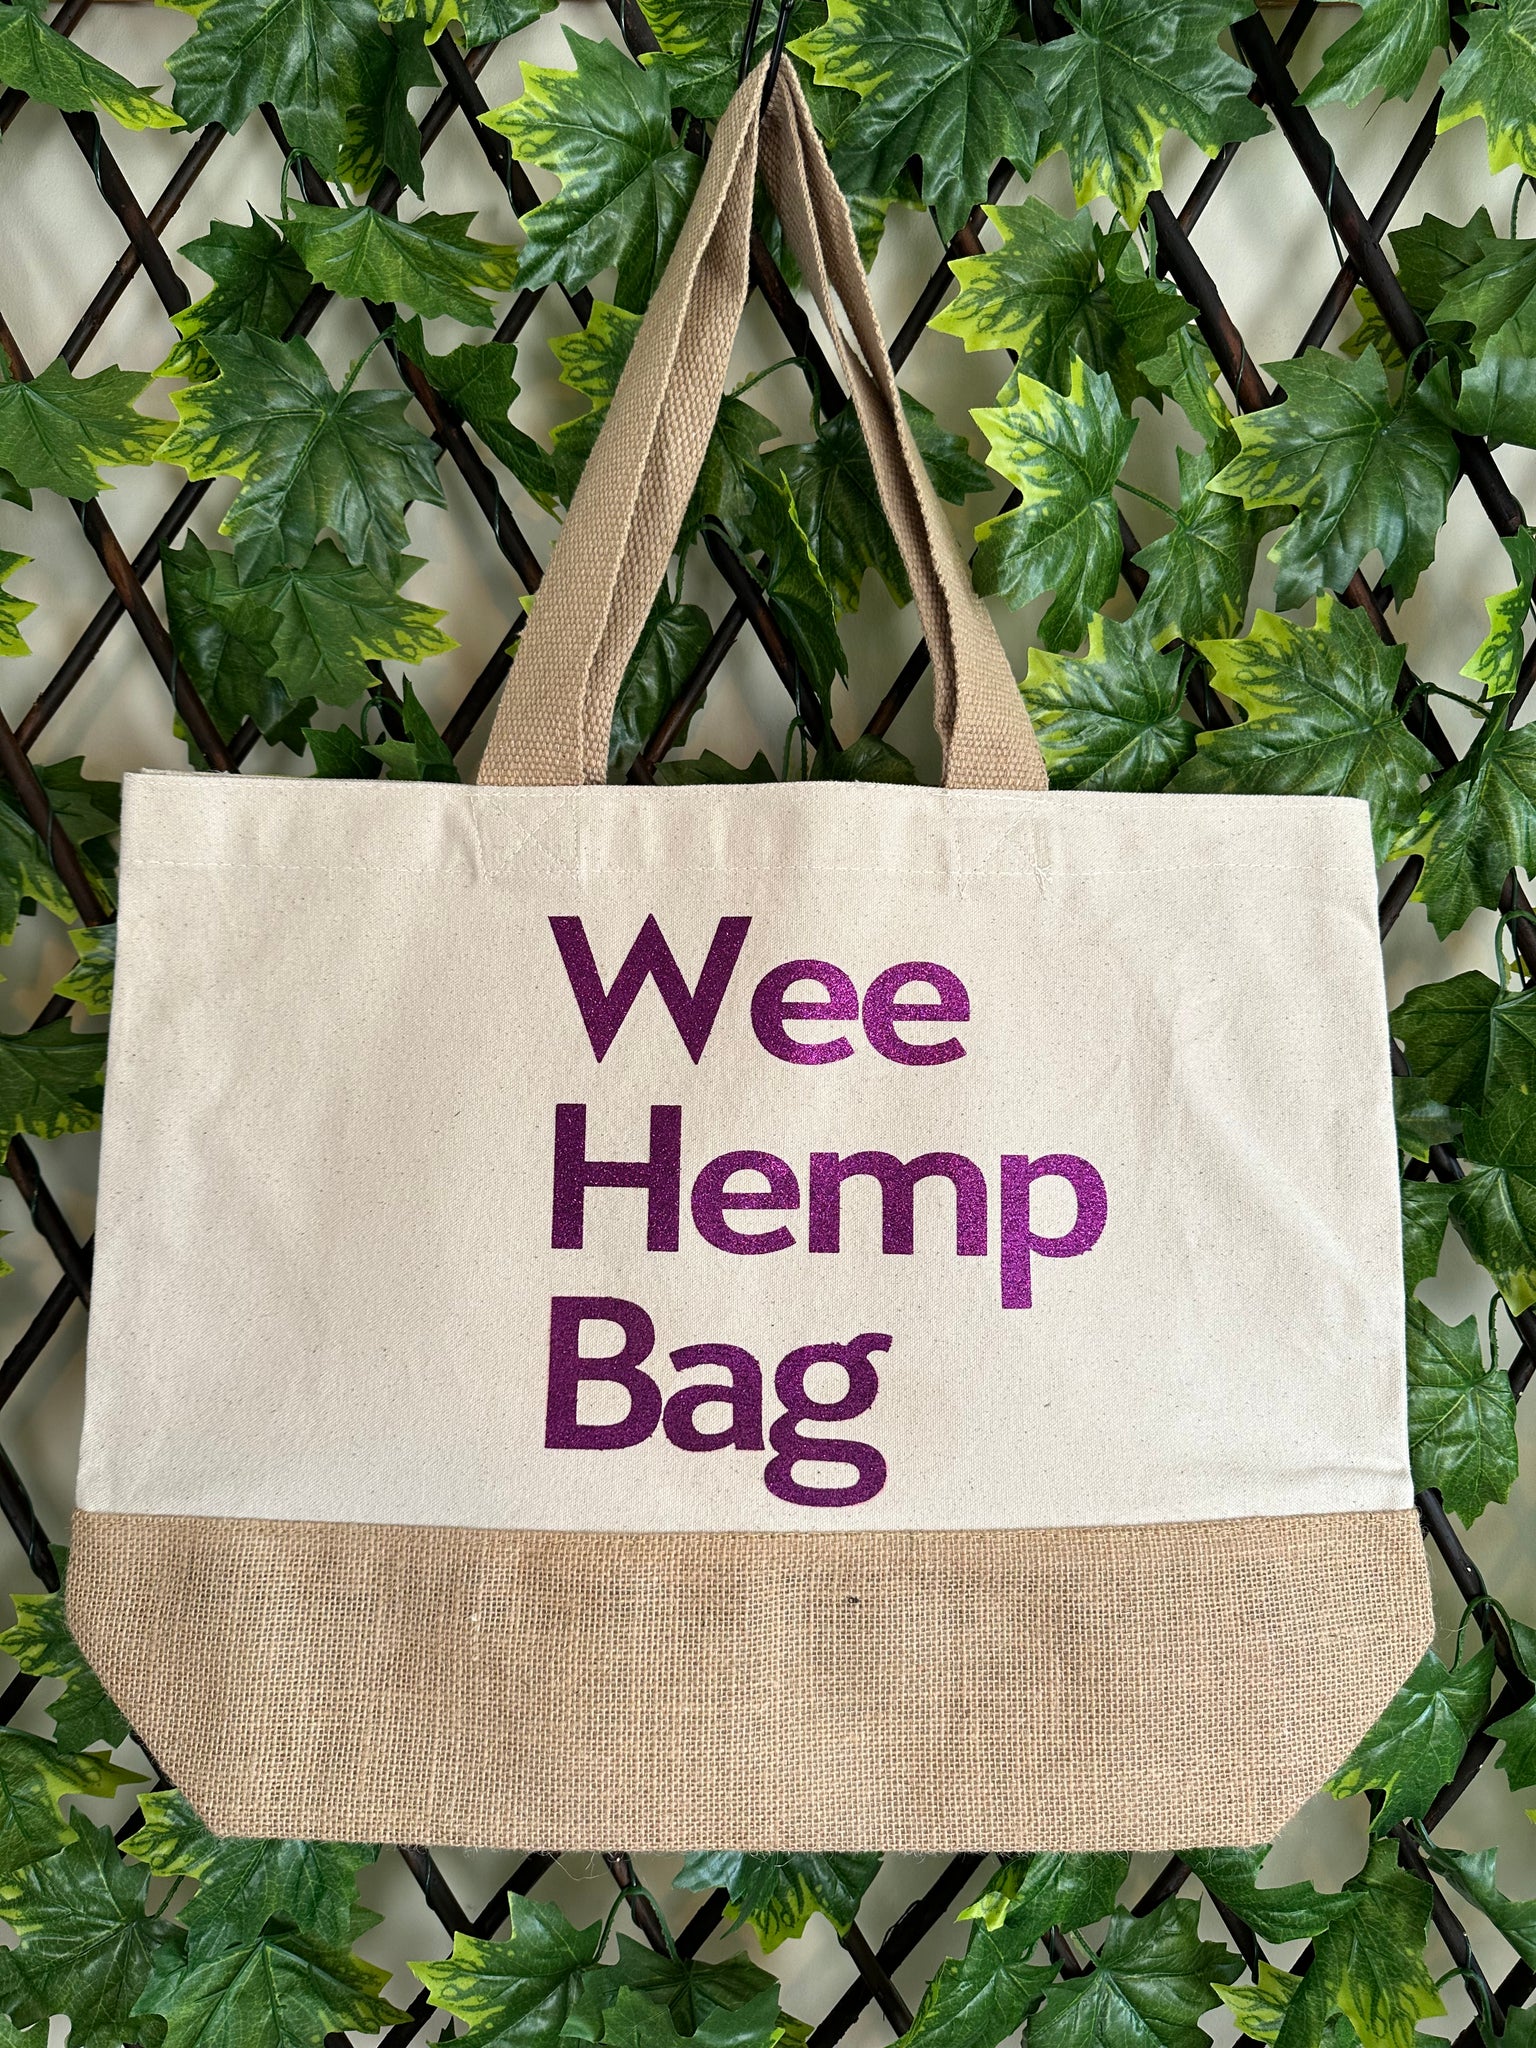 Wee Hemp Bag For Life